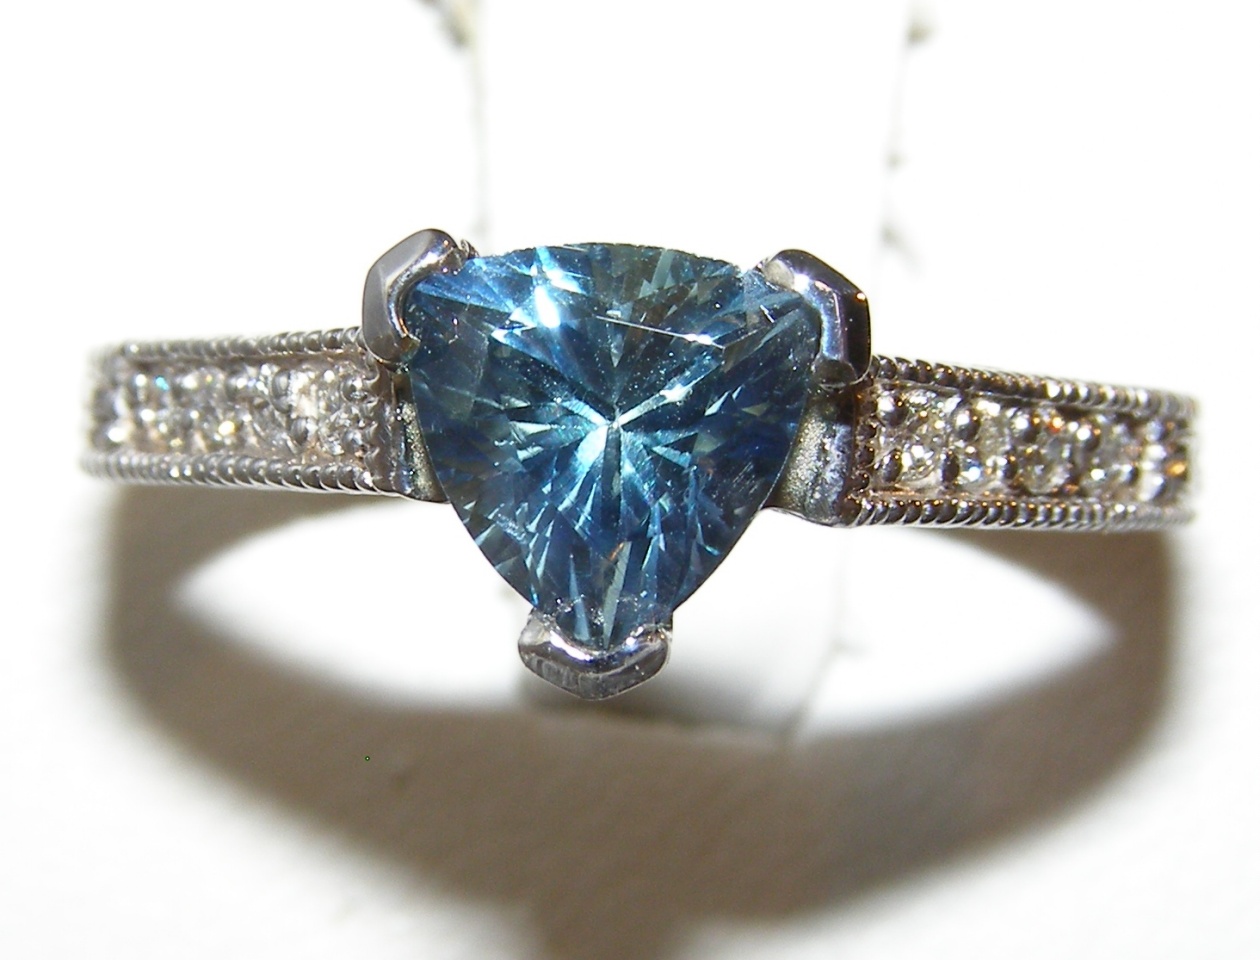 Trilliant Cut Blue/Teal Sapphire Diamond Ring 14KWG 1.70 ctw